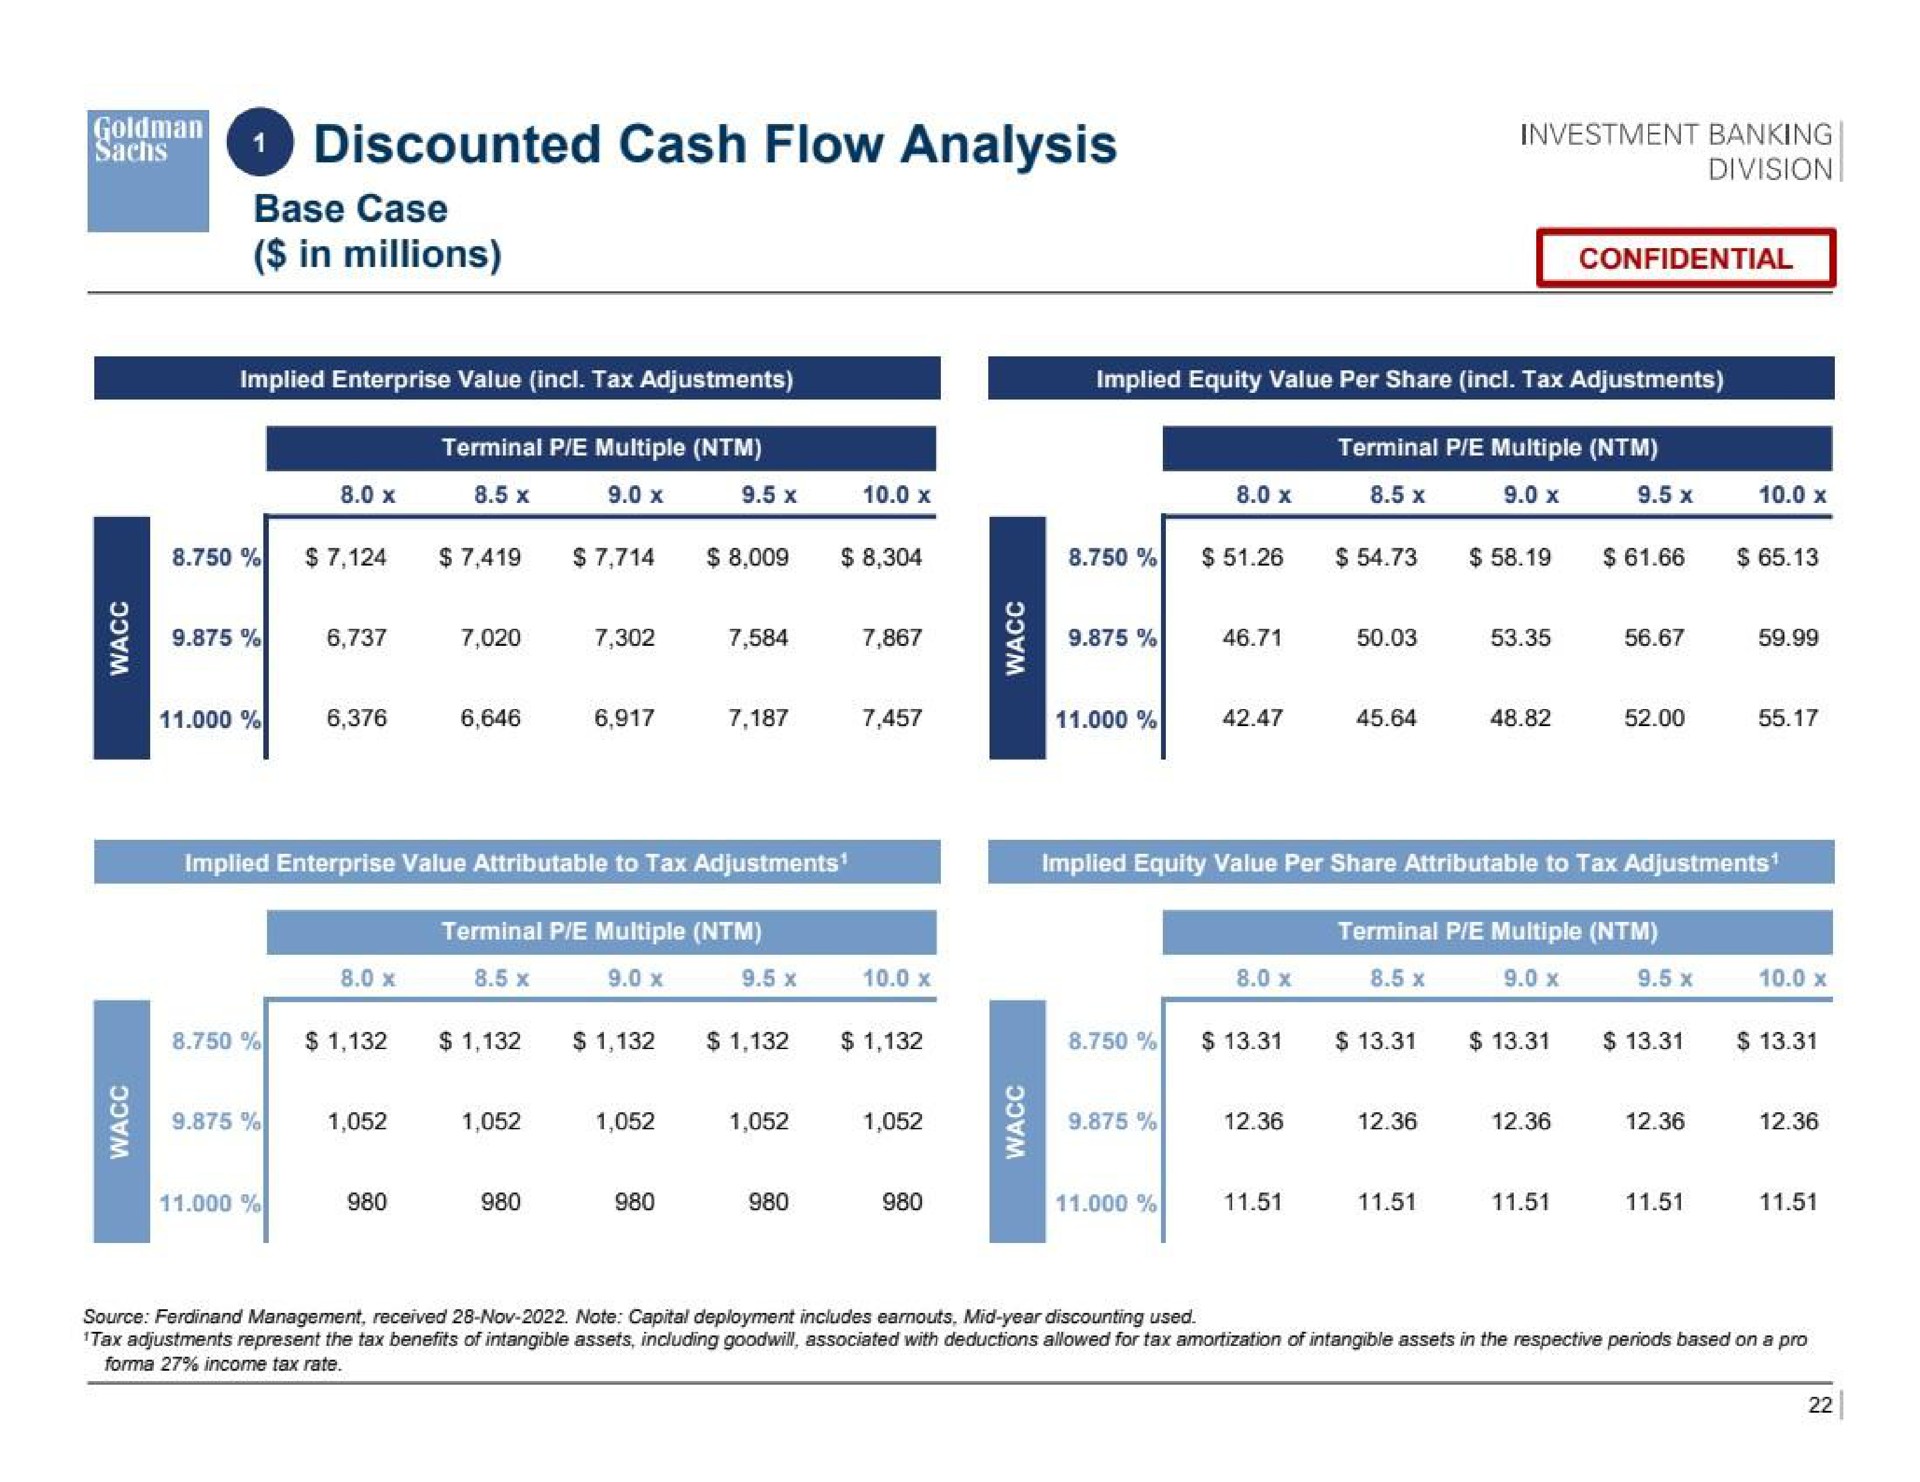 discounted cash flow analysis | Goldman Sachs